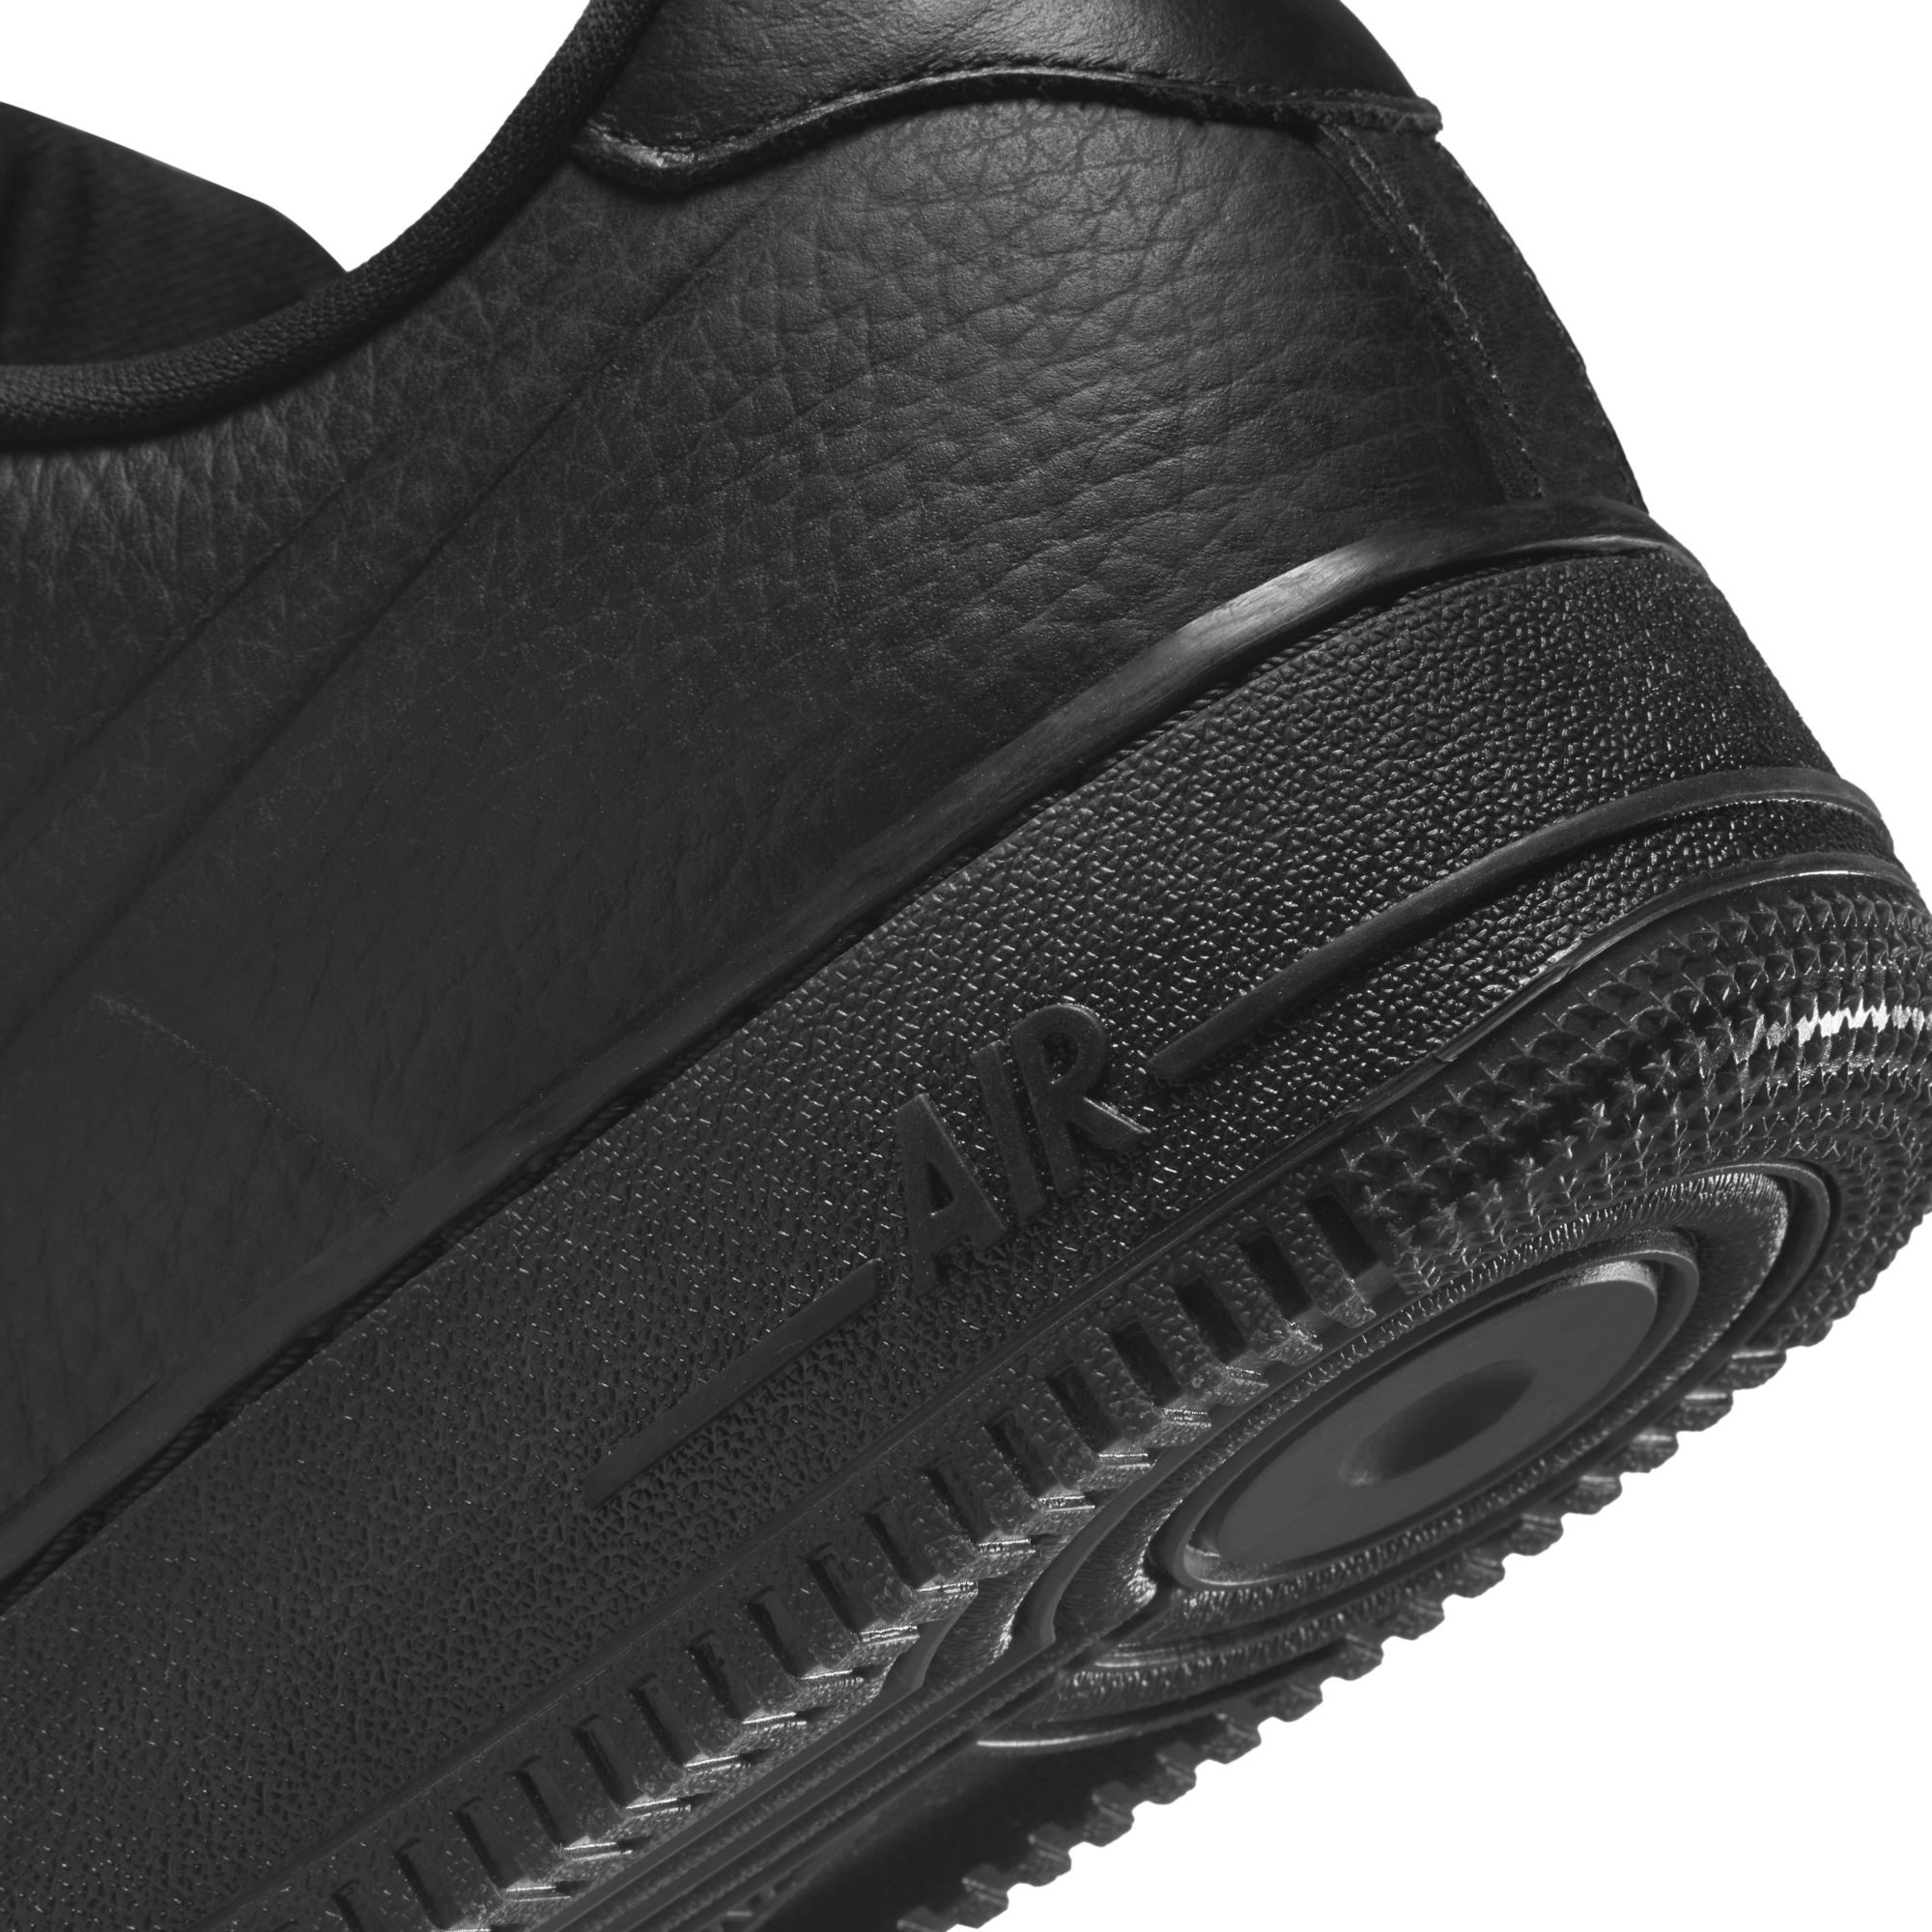 At this point, Nike's Air Force 1 Waterproof 'Triple Black' is